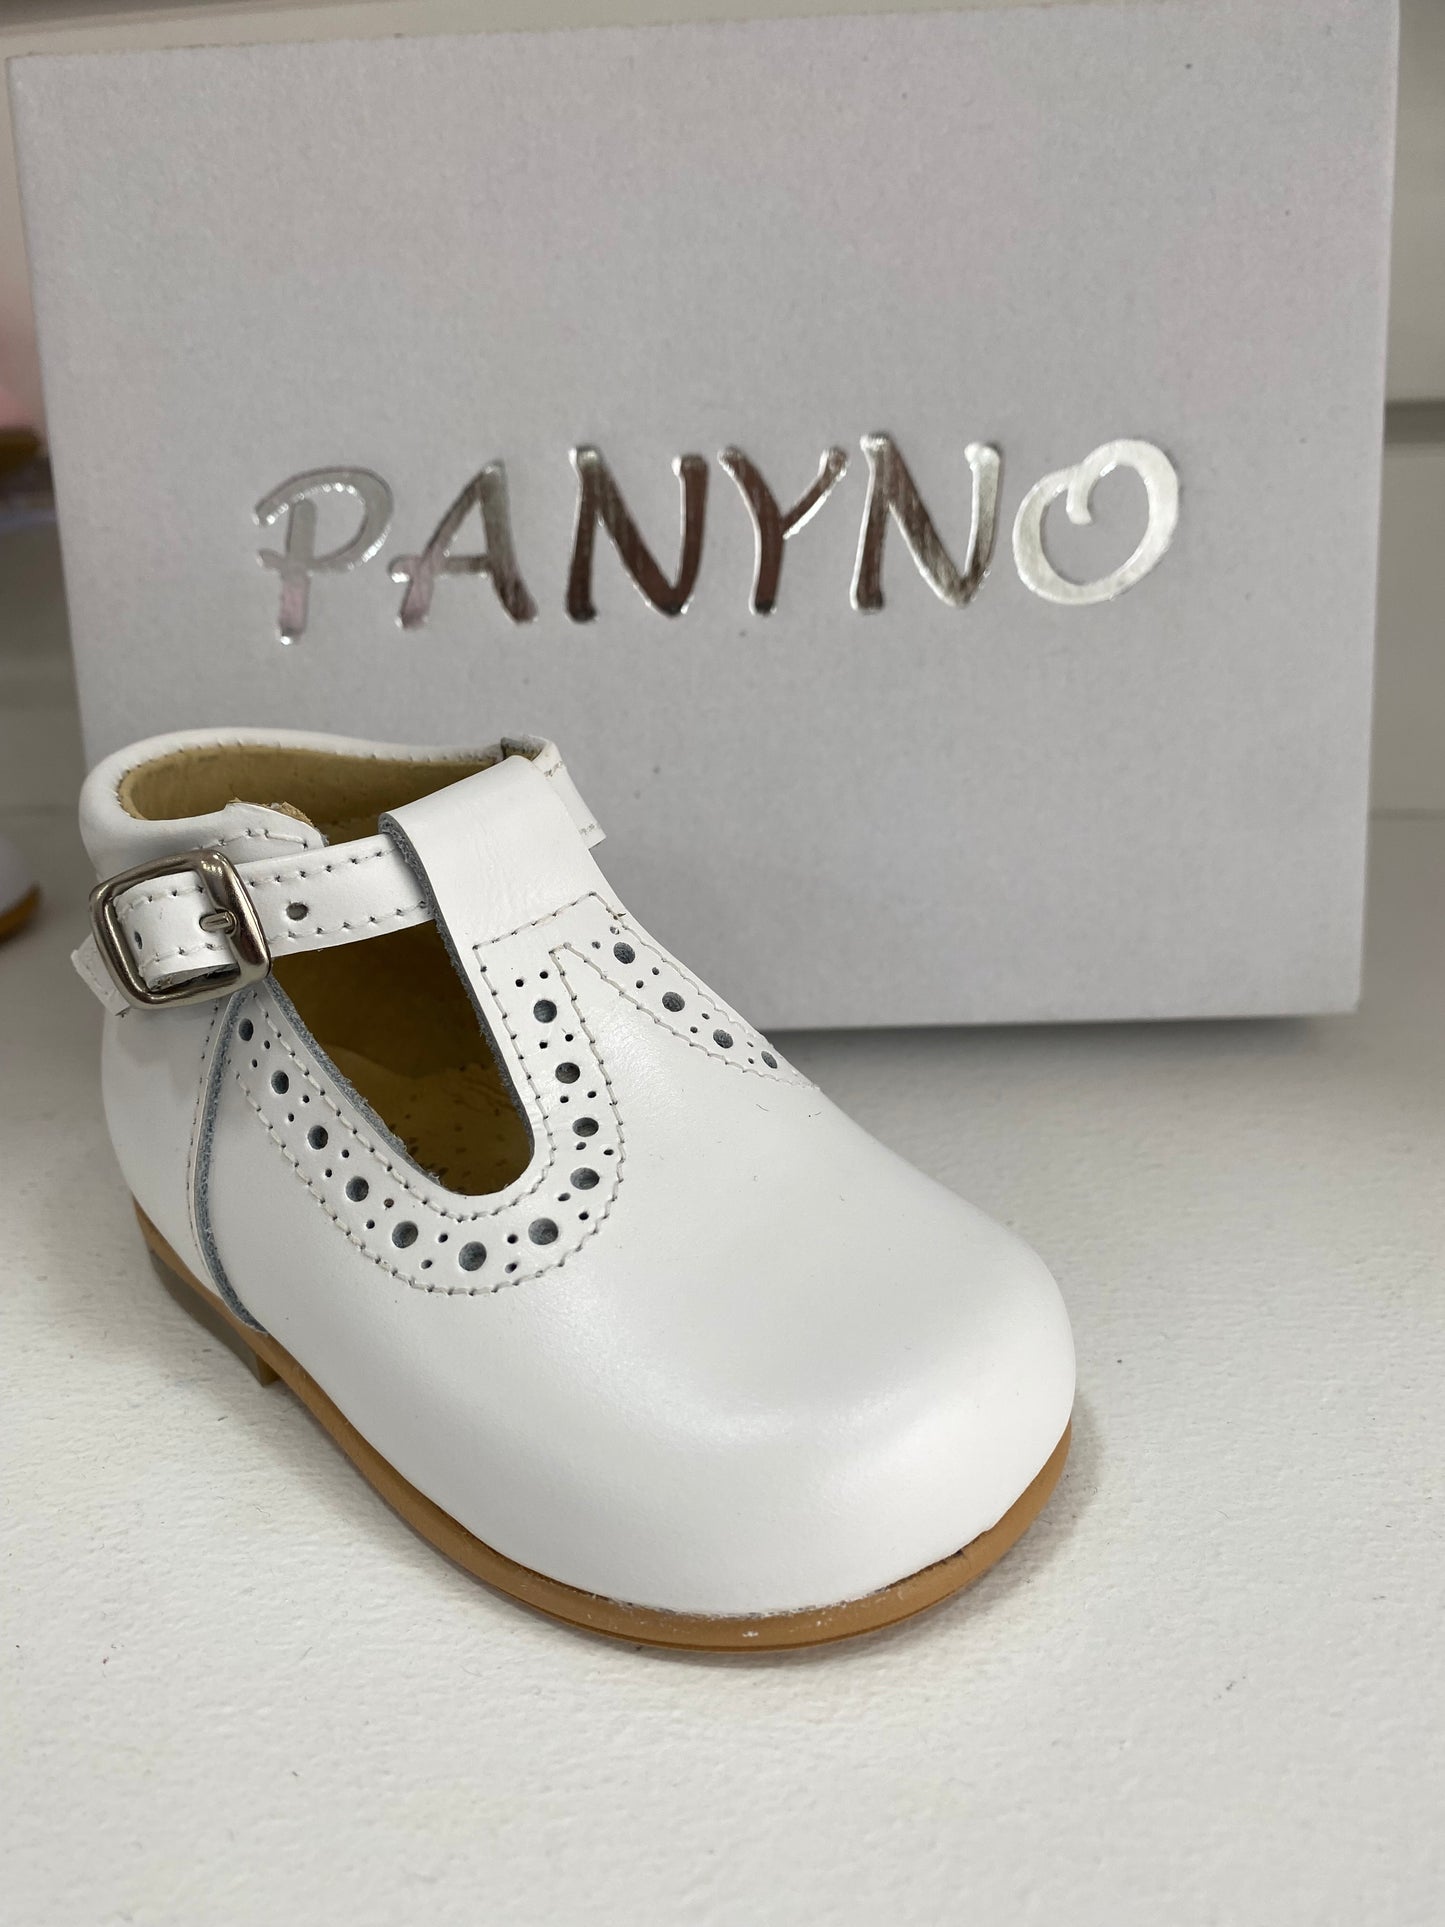 Panyno Boys T Bar Shoes